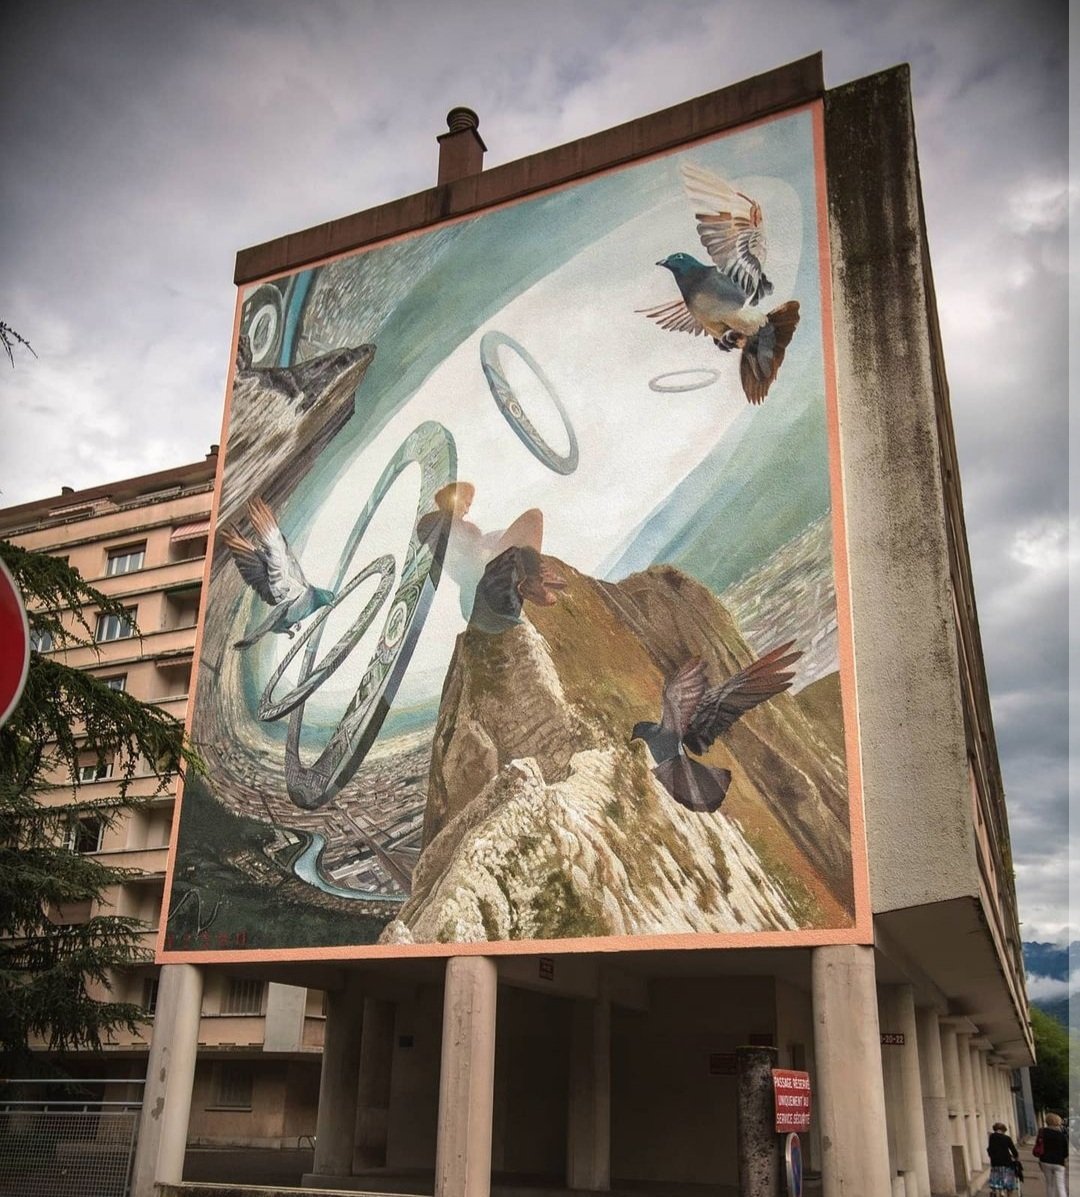 'Sincronie' by Italian Vesod for Street Art Fest 2021 in Grenoble, France #vesod #gsaf2021 #grenoblestreetart #streetart #lamolinastreetart 📷 by Andrea Berlese via artist bit.ly/3BlX47o